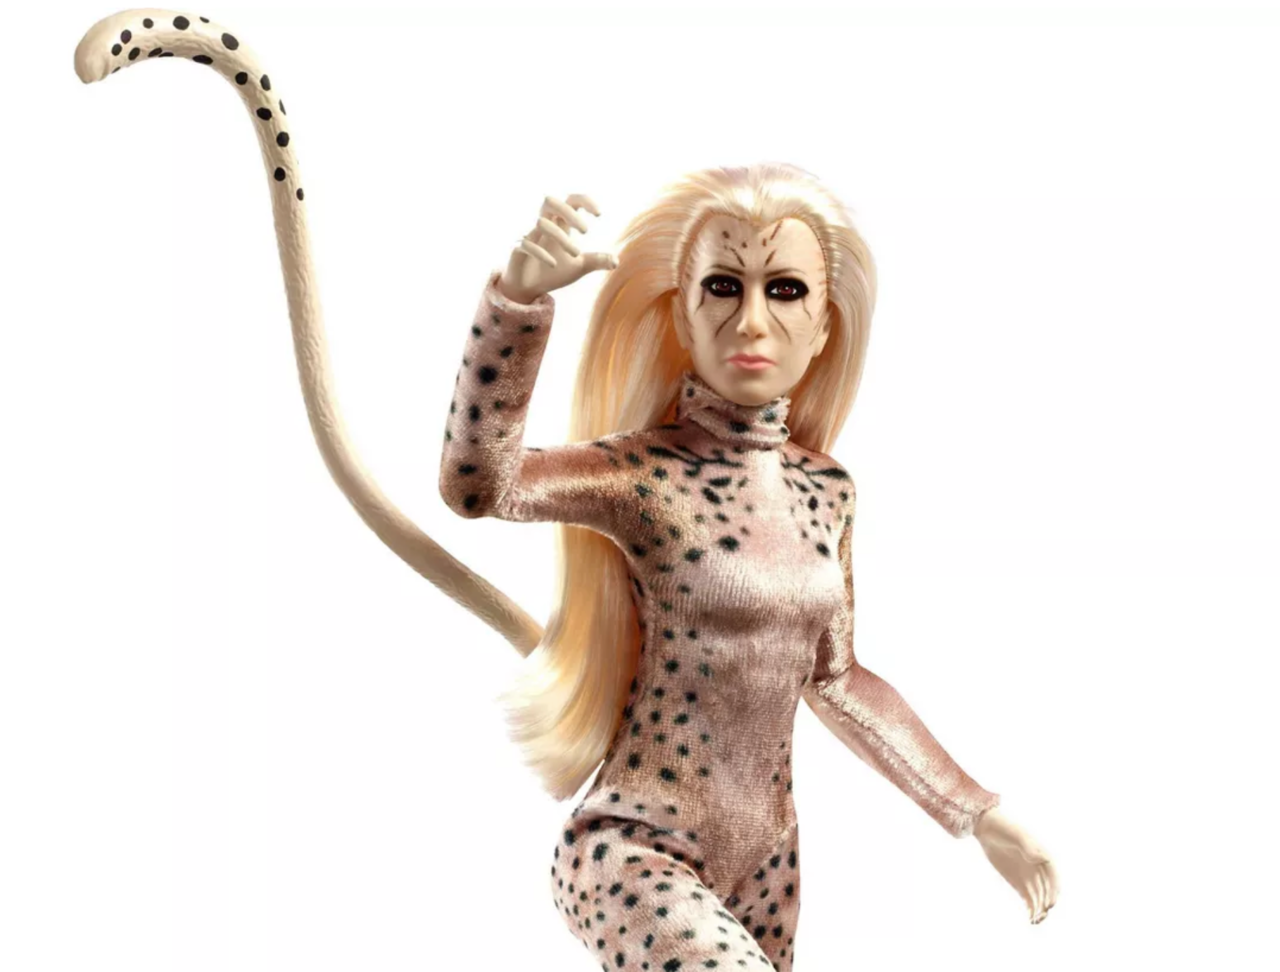 Cheetah doll from Mattel